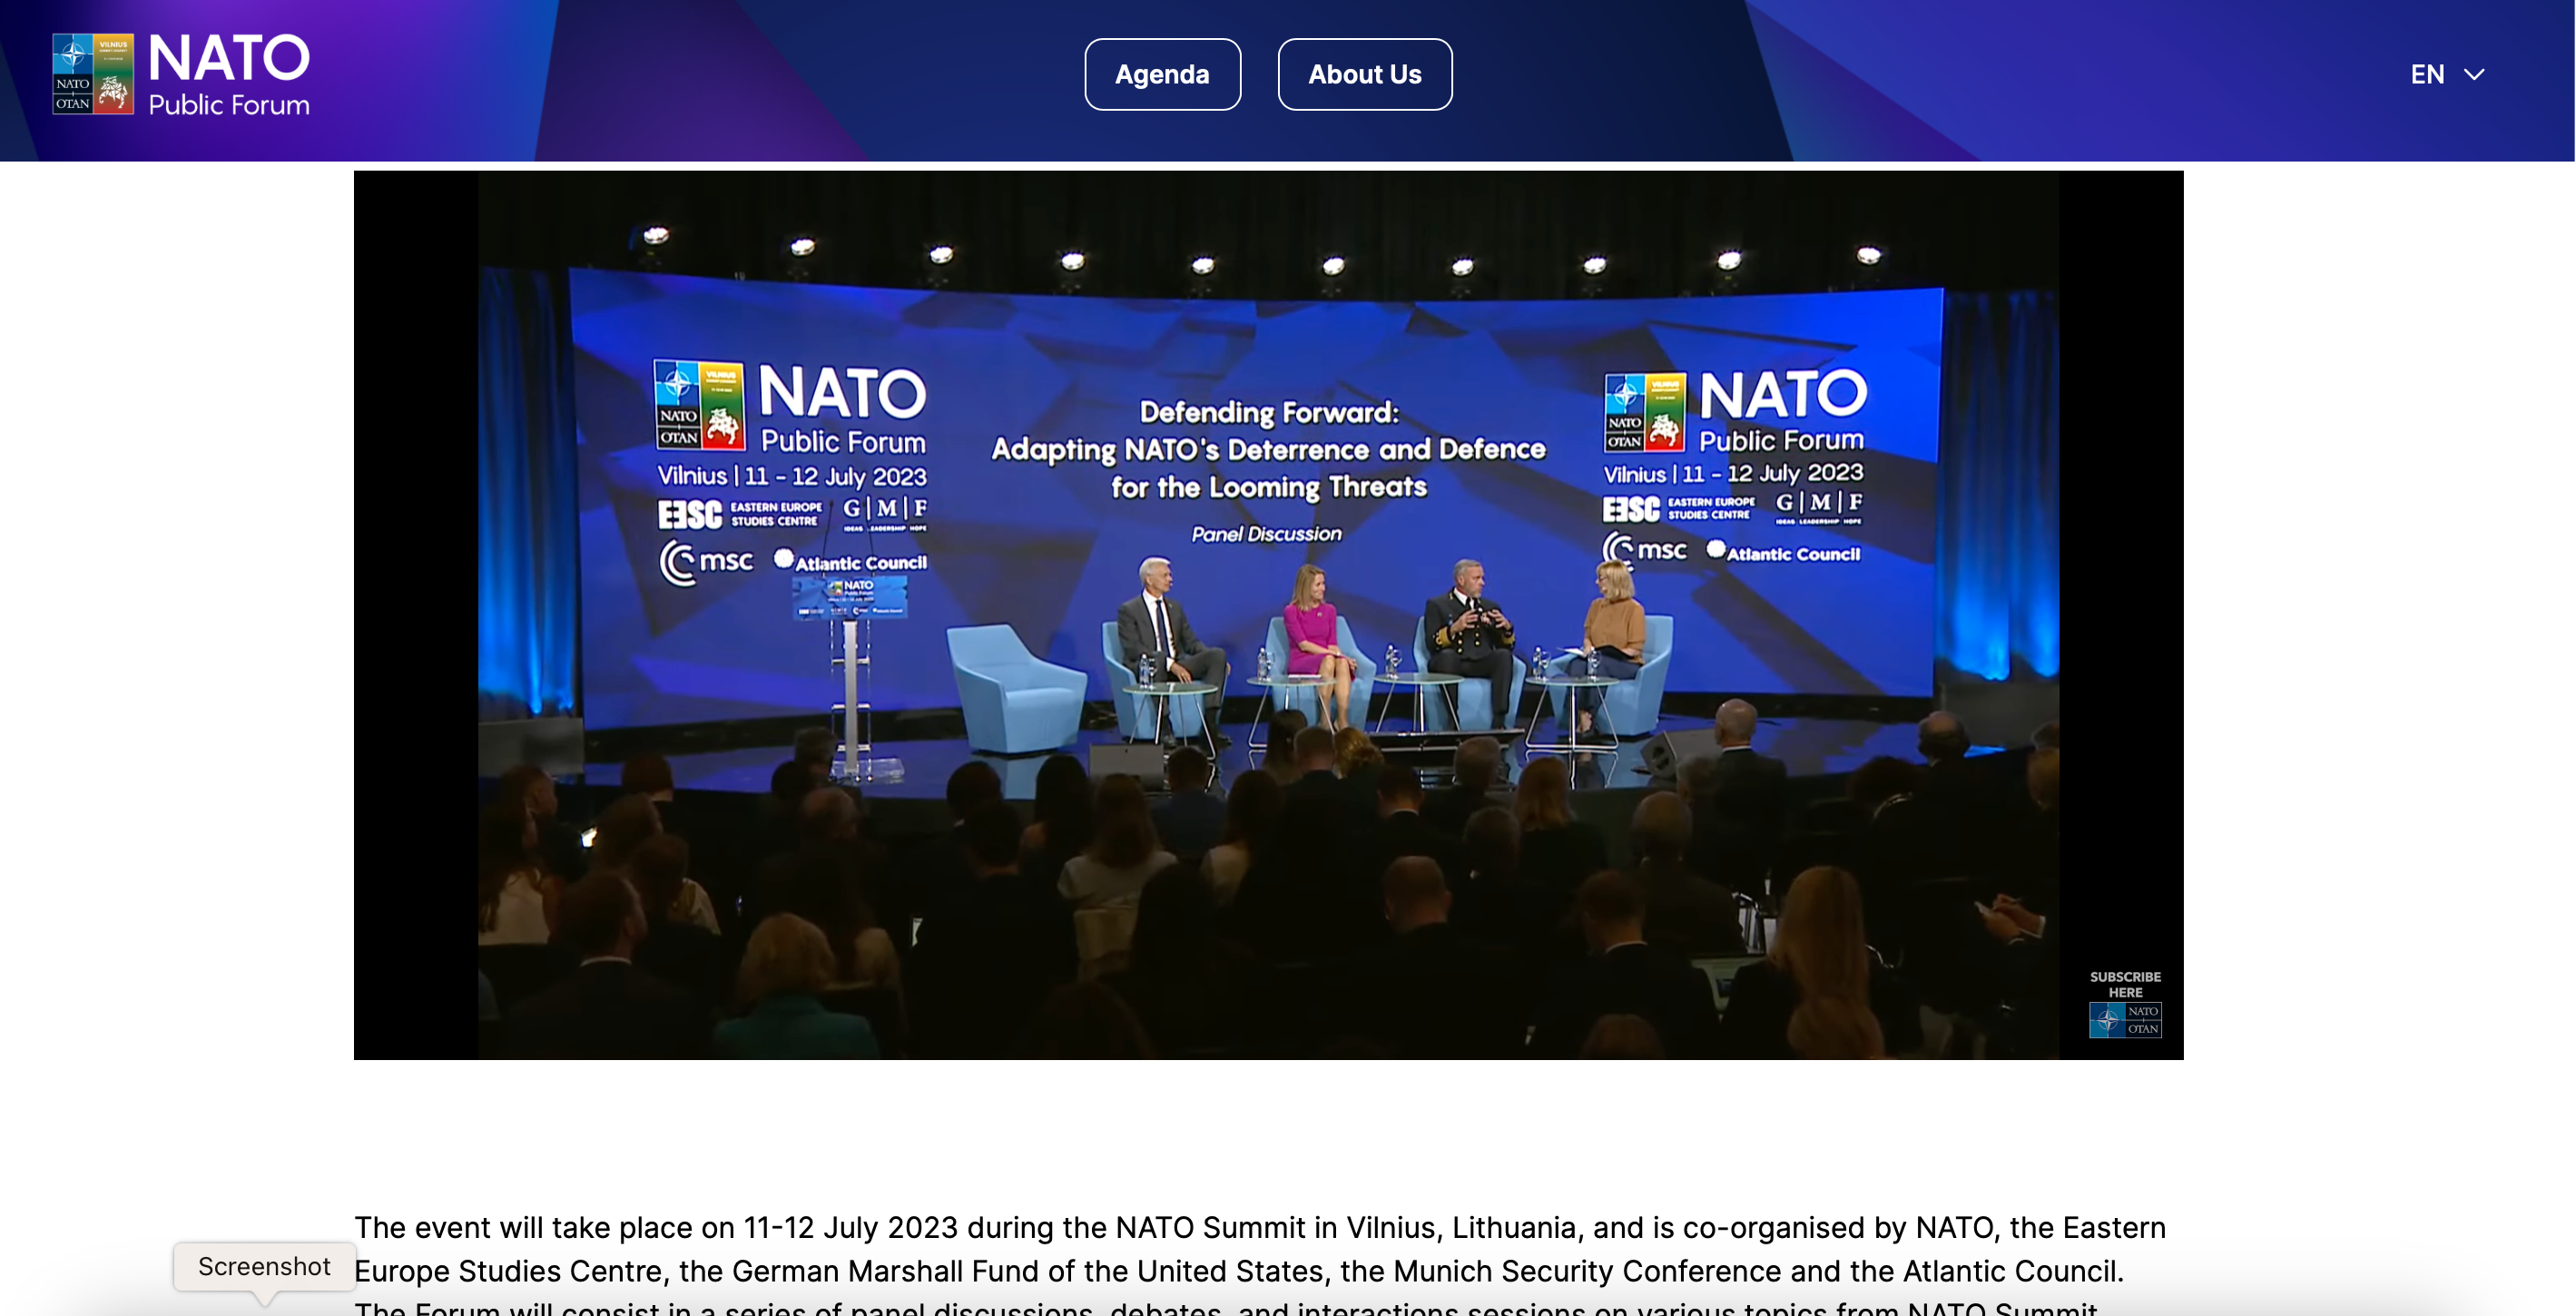 GPYR NATO Public Forum website broadcasting